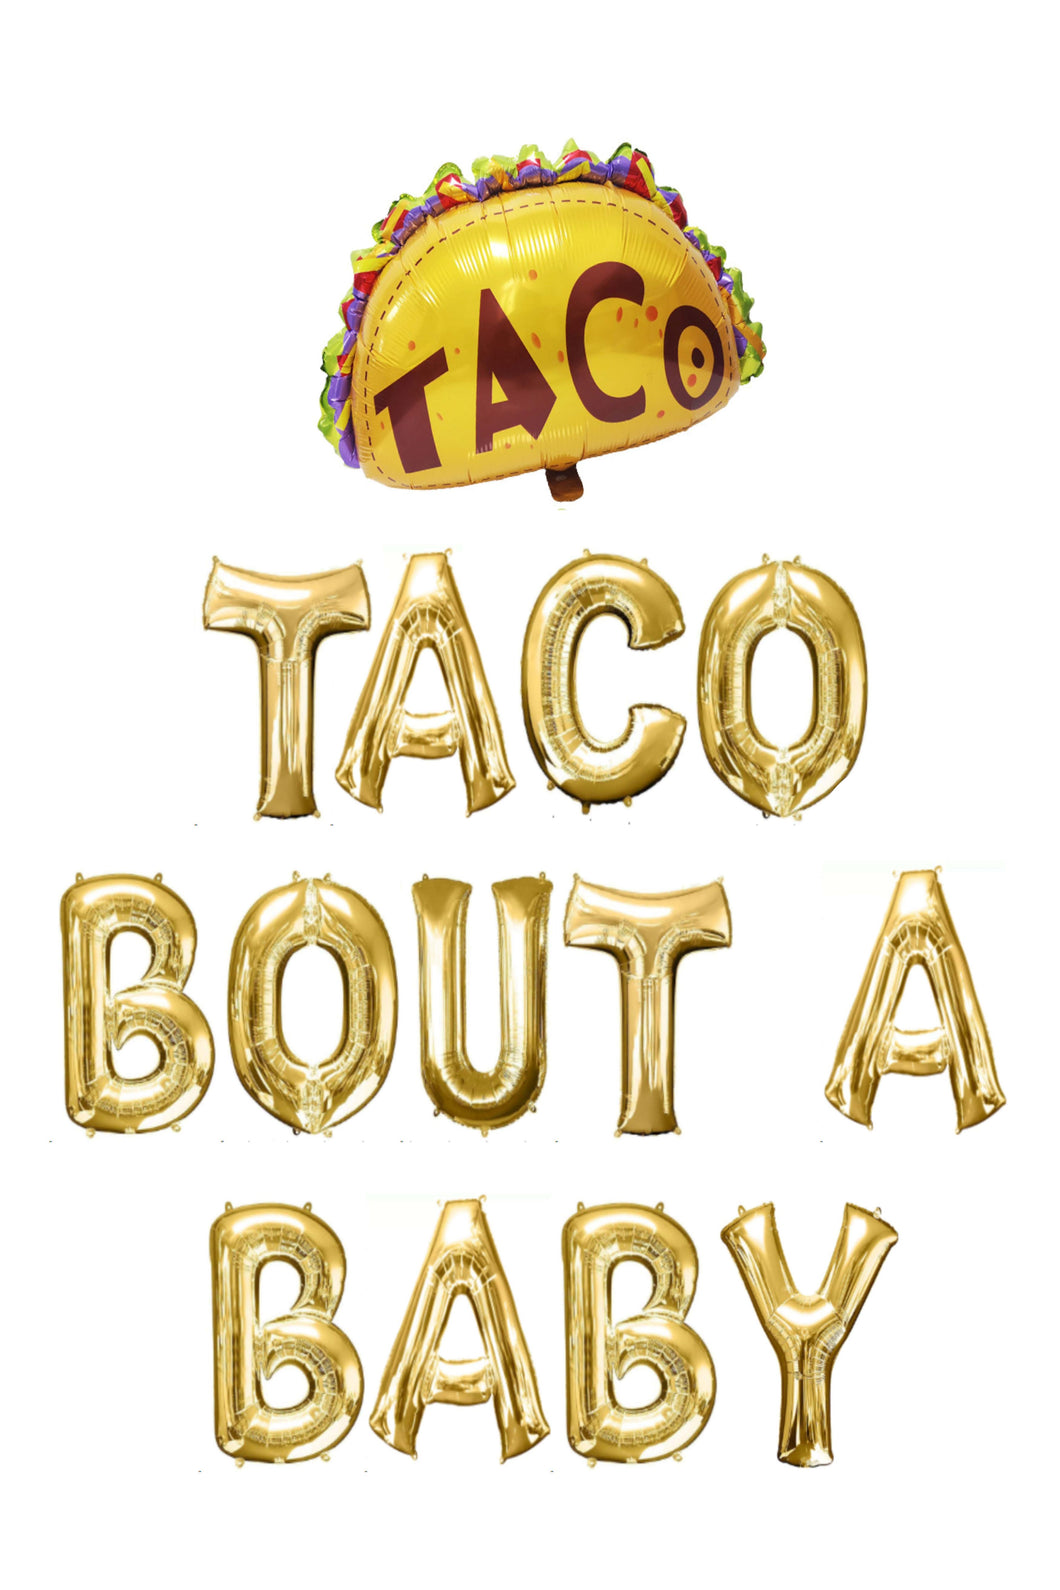 Taco Baby Shower Banner